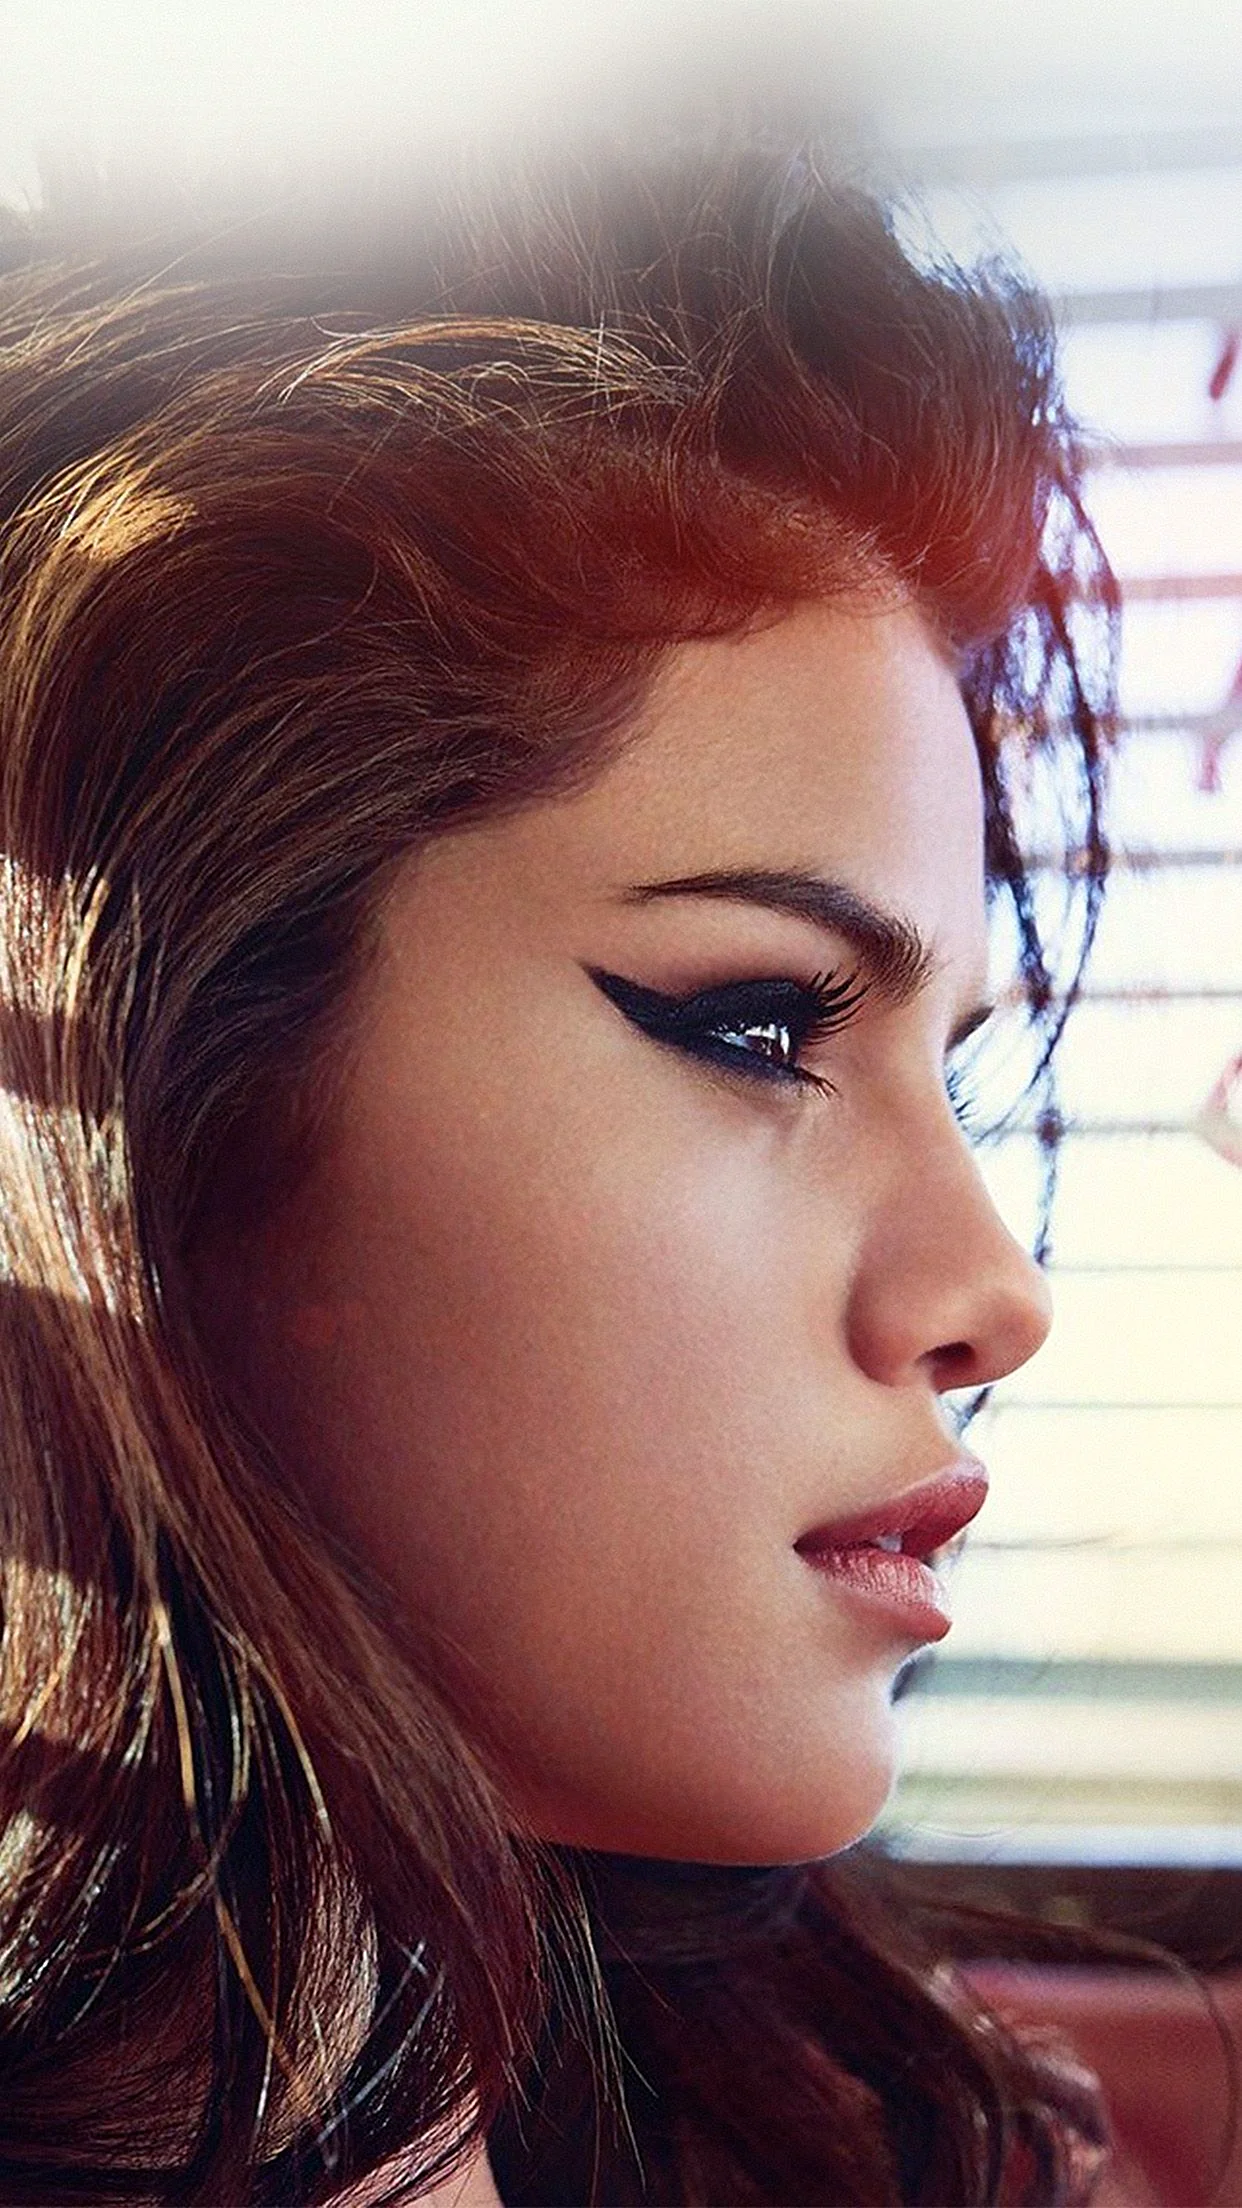 Selena Gomez Face Wallpaper For iPhone